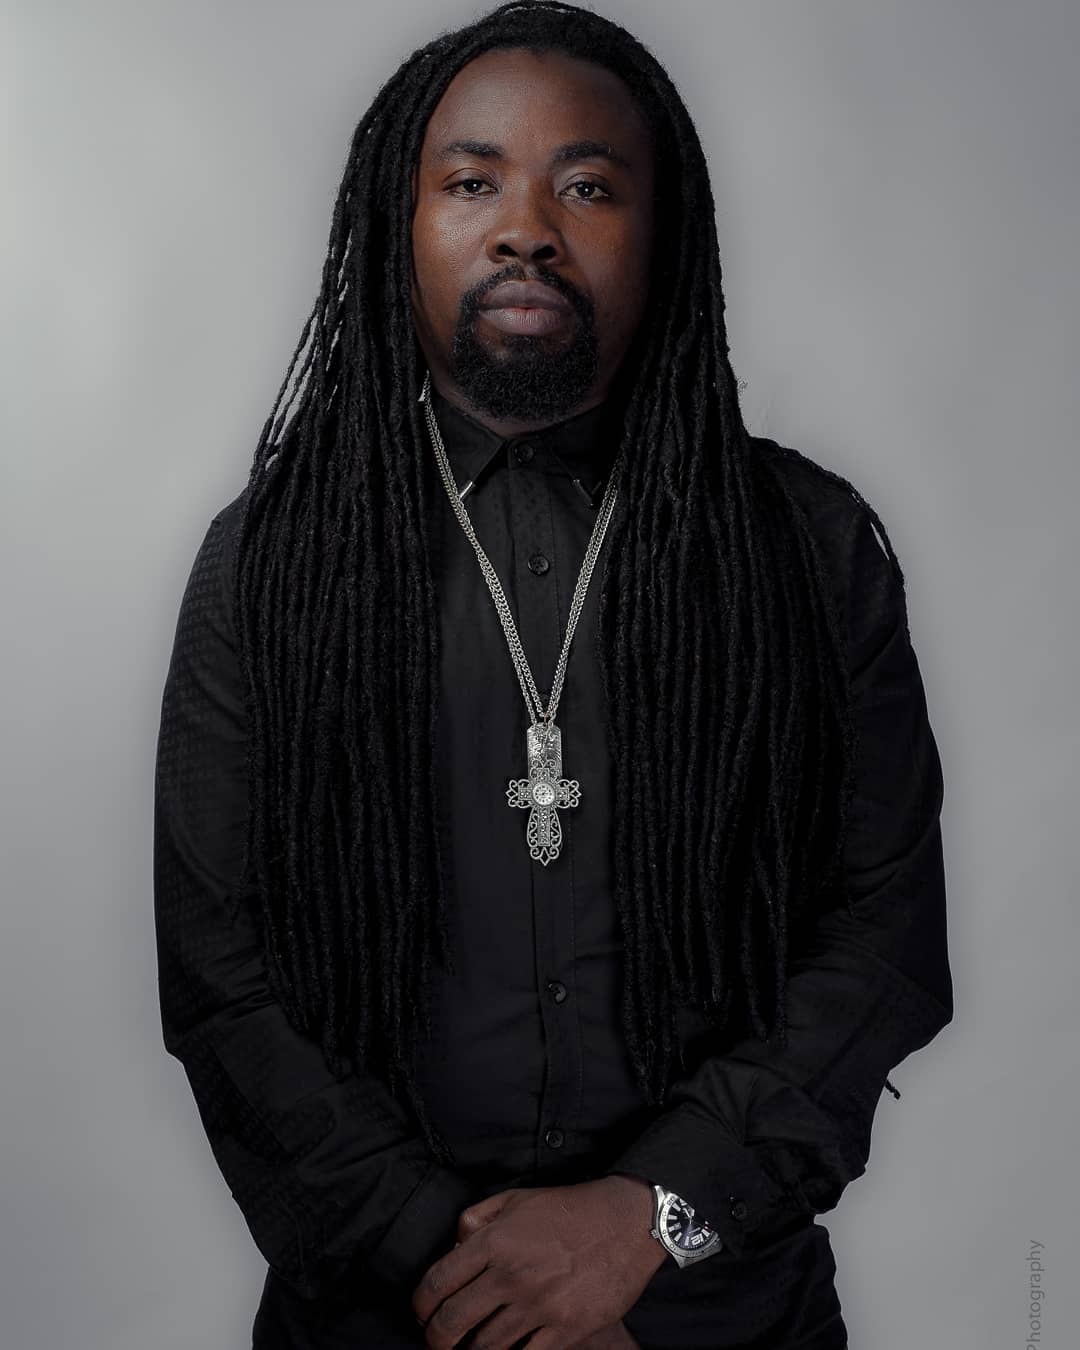 ‘No Ghanaian Rapper Can Rap Better Than Me’ – Obrafour Brags